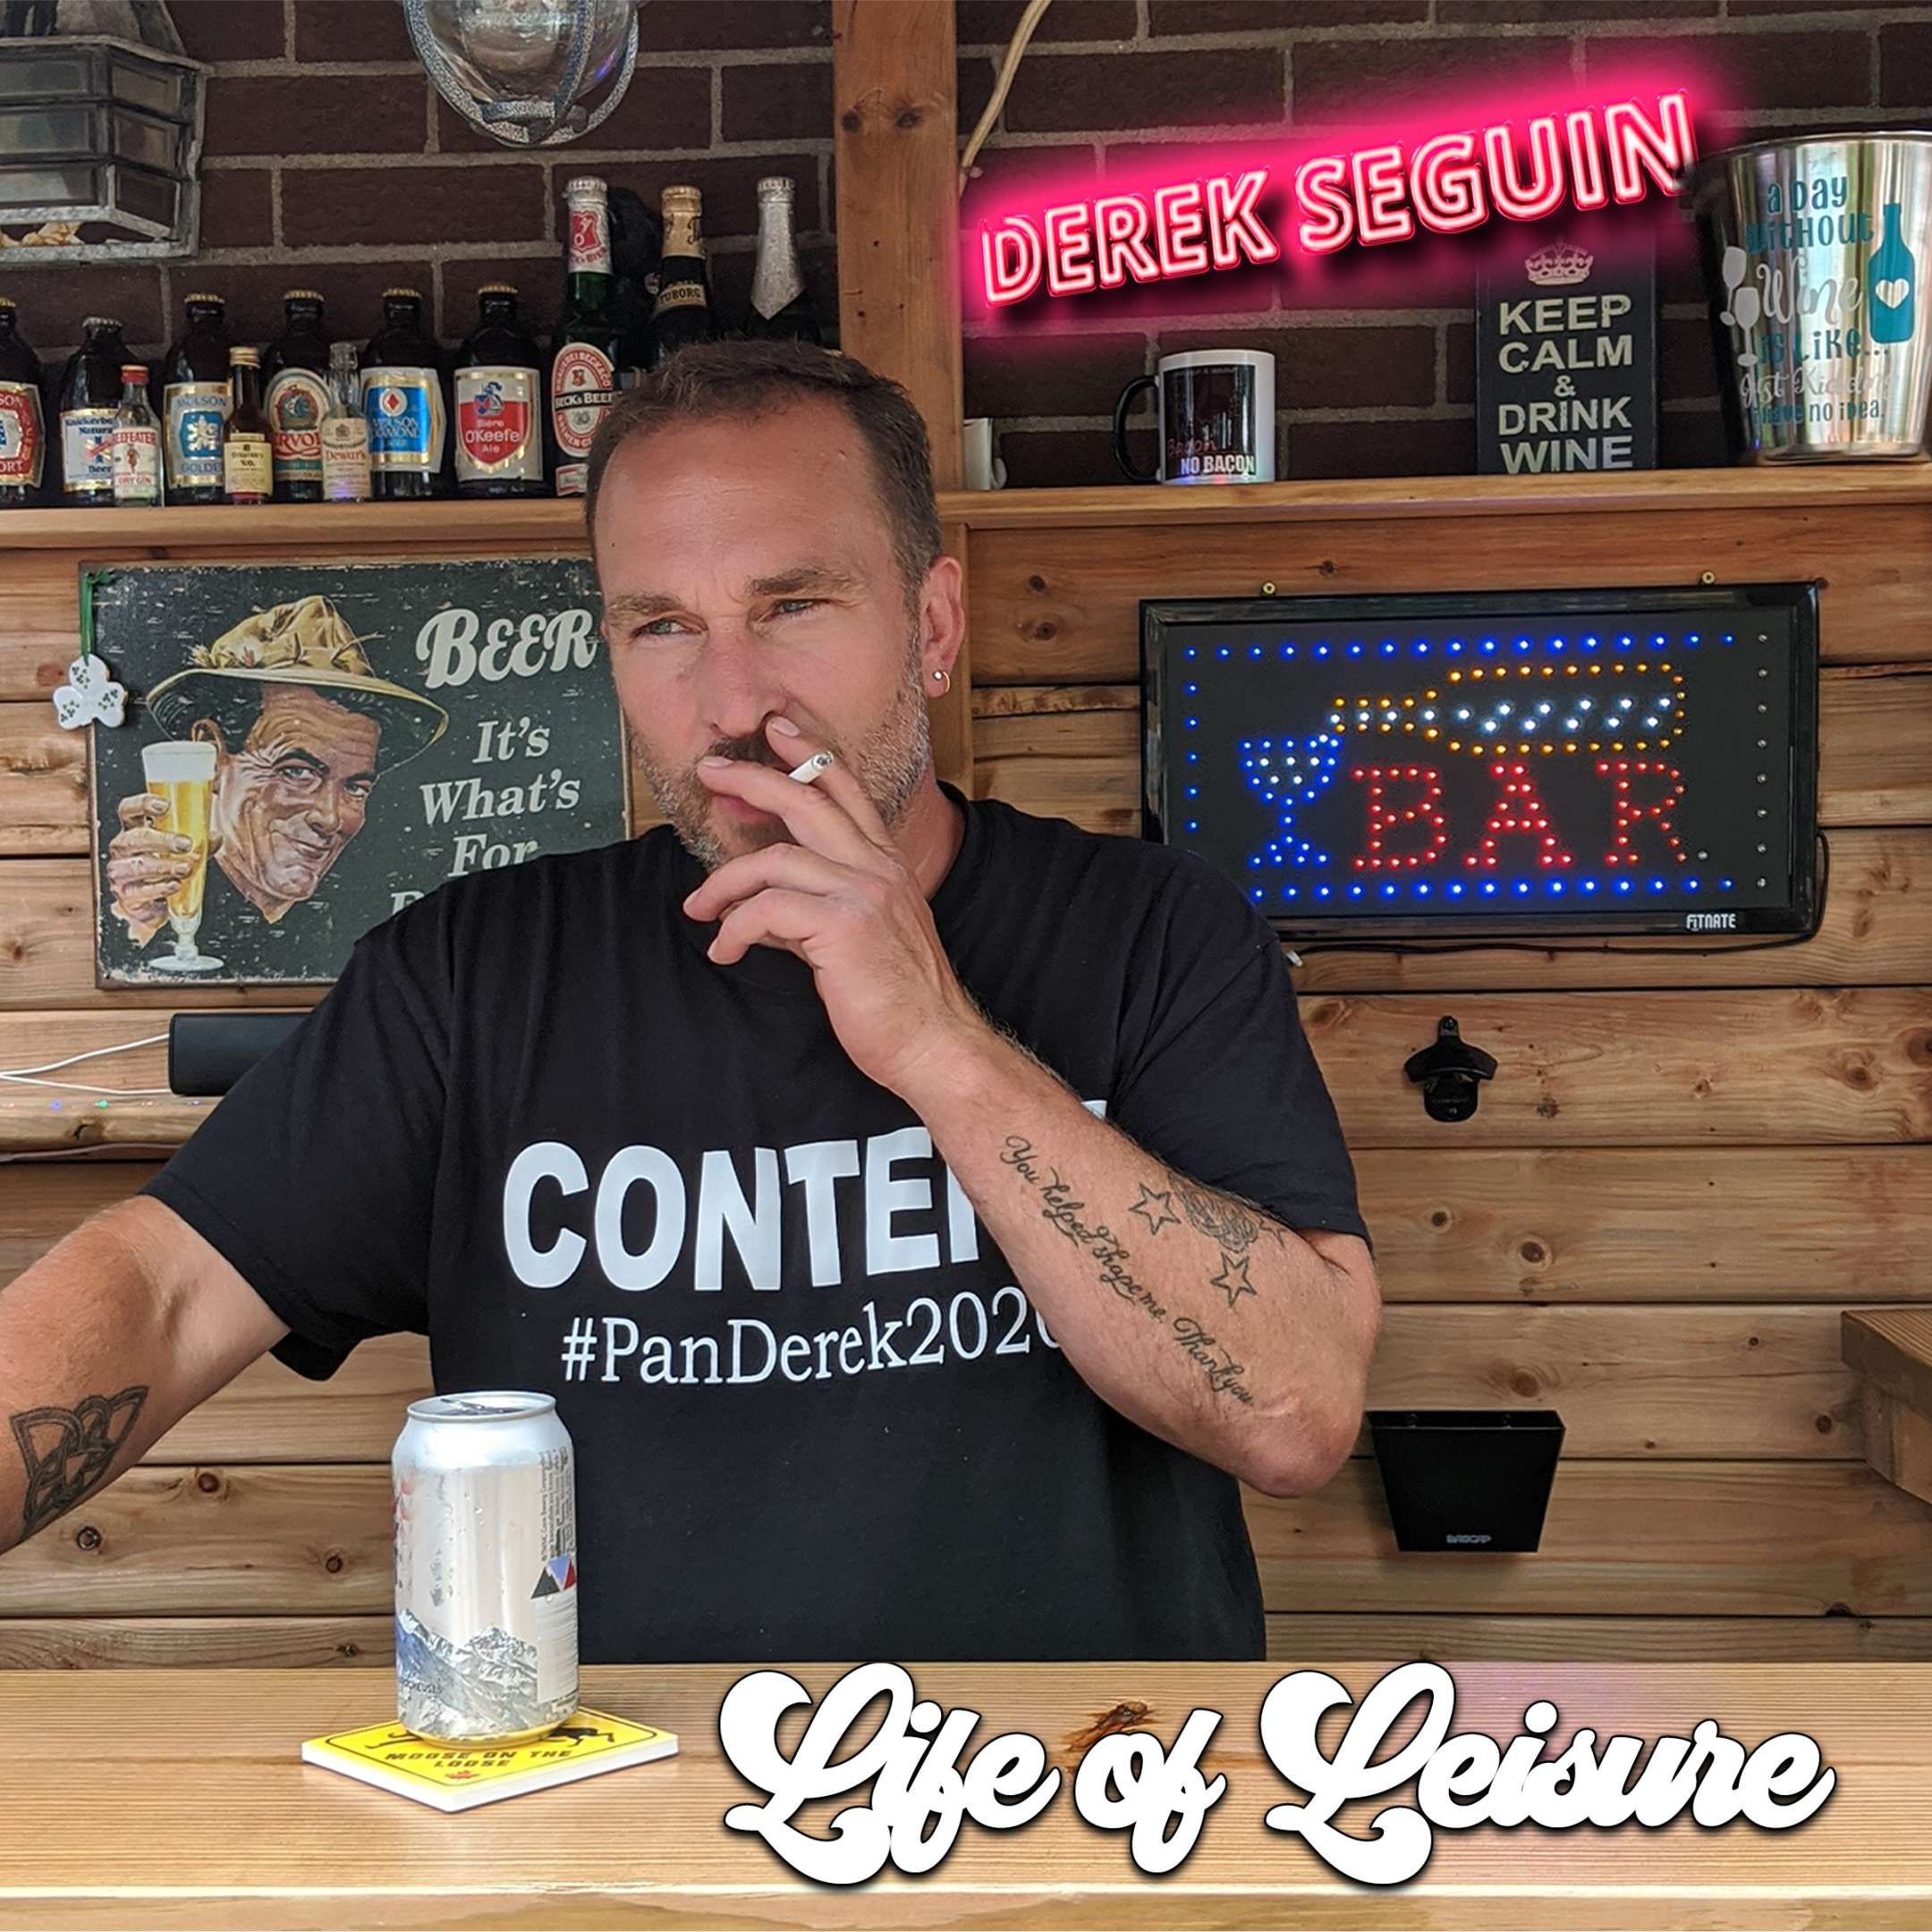 Derek Seguin: Life of Leisure Tour is coming!